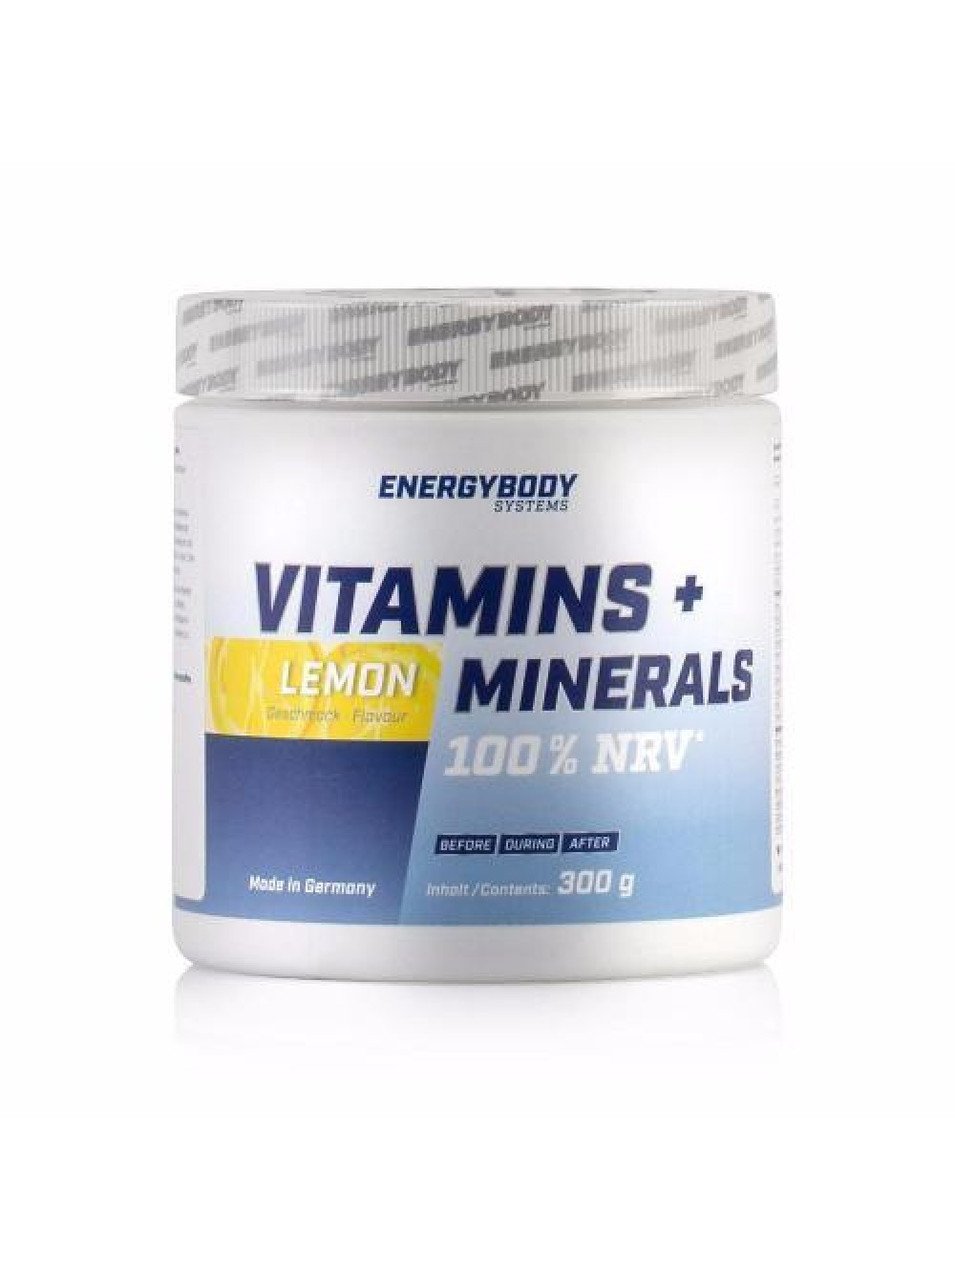 Energybody Комплекс витаминов Energy Body Vitamins + Minerals (300 г) lemon, , 300 